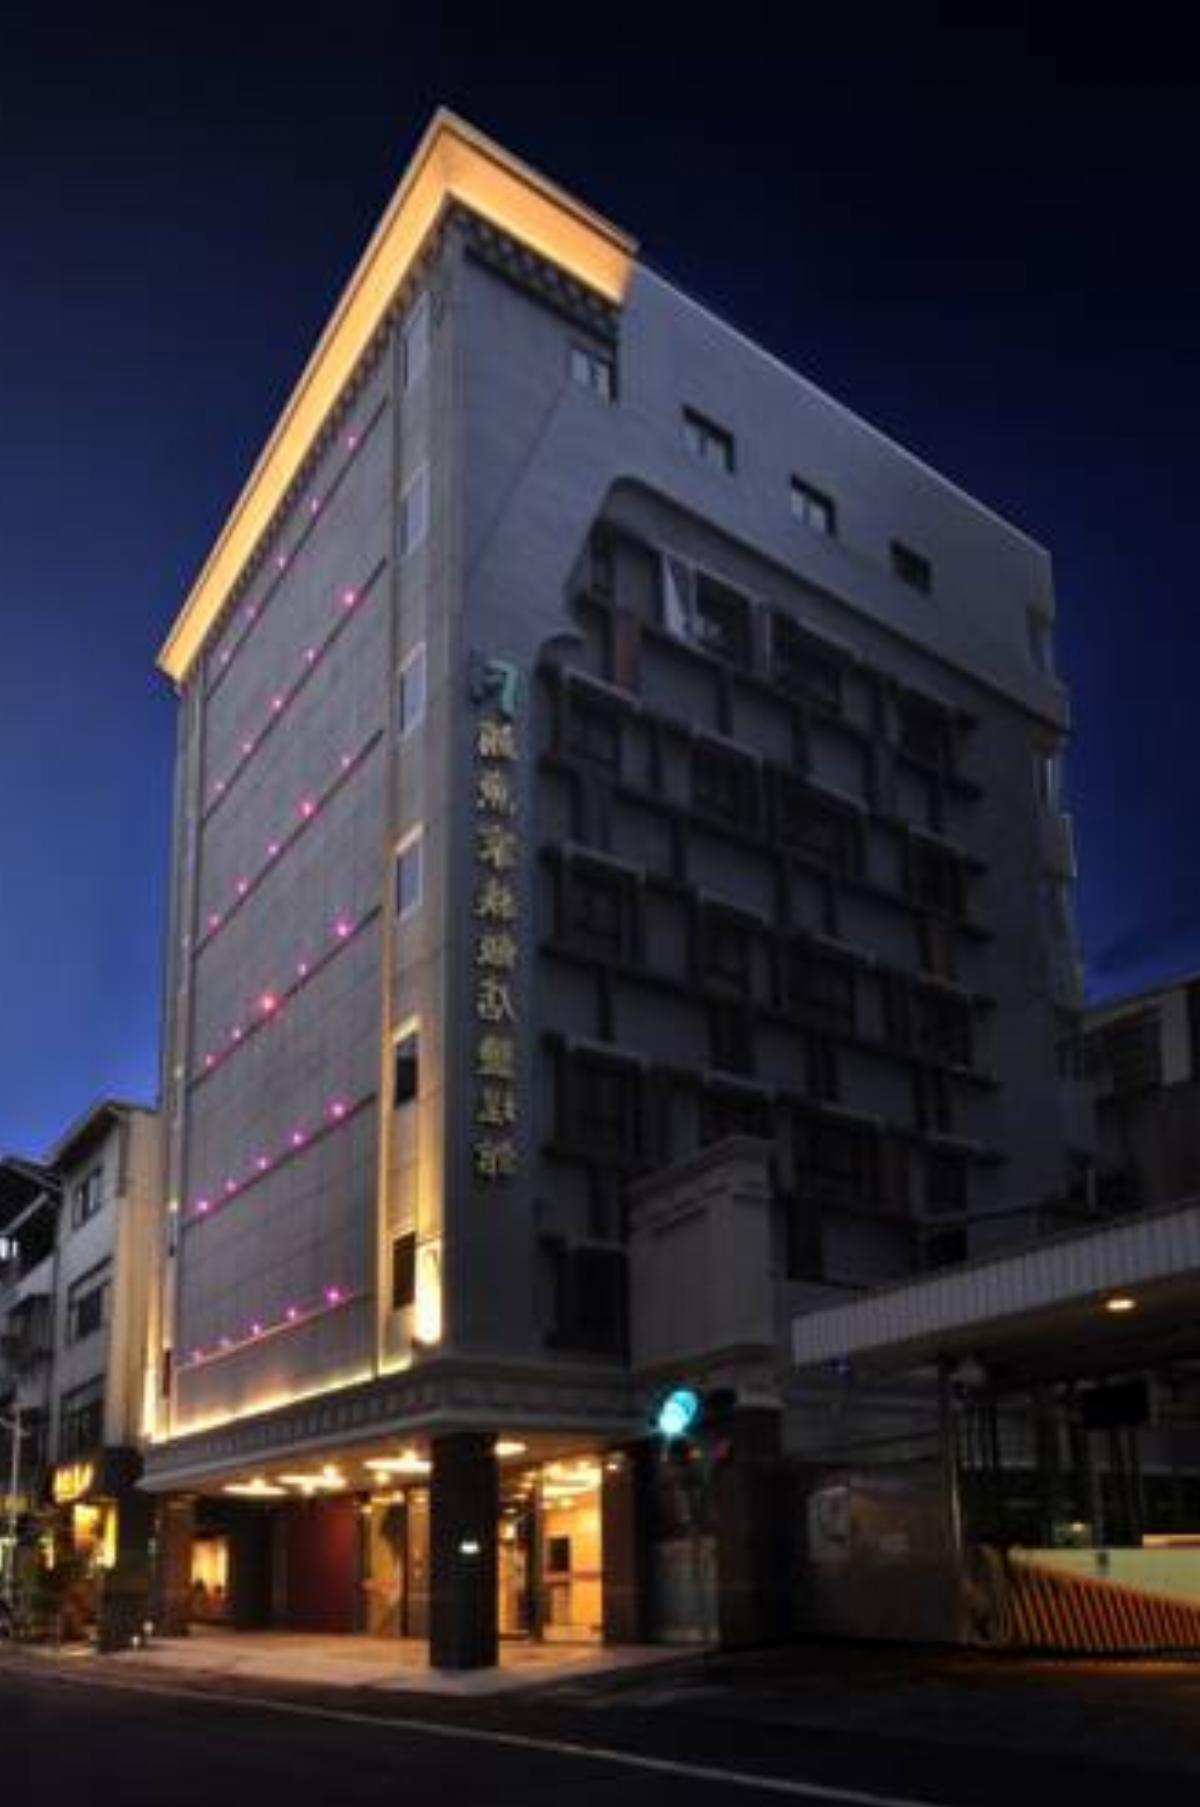 Fish Hotel - Yancheng Hotel Kaohsiung Taiwan